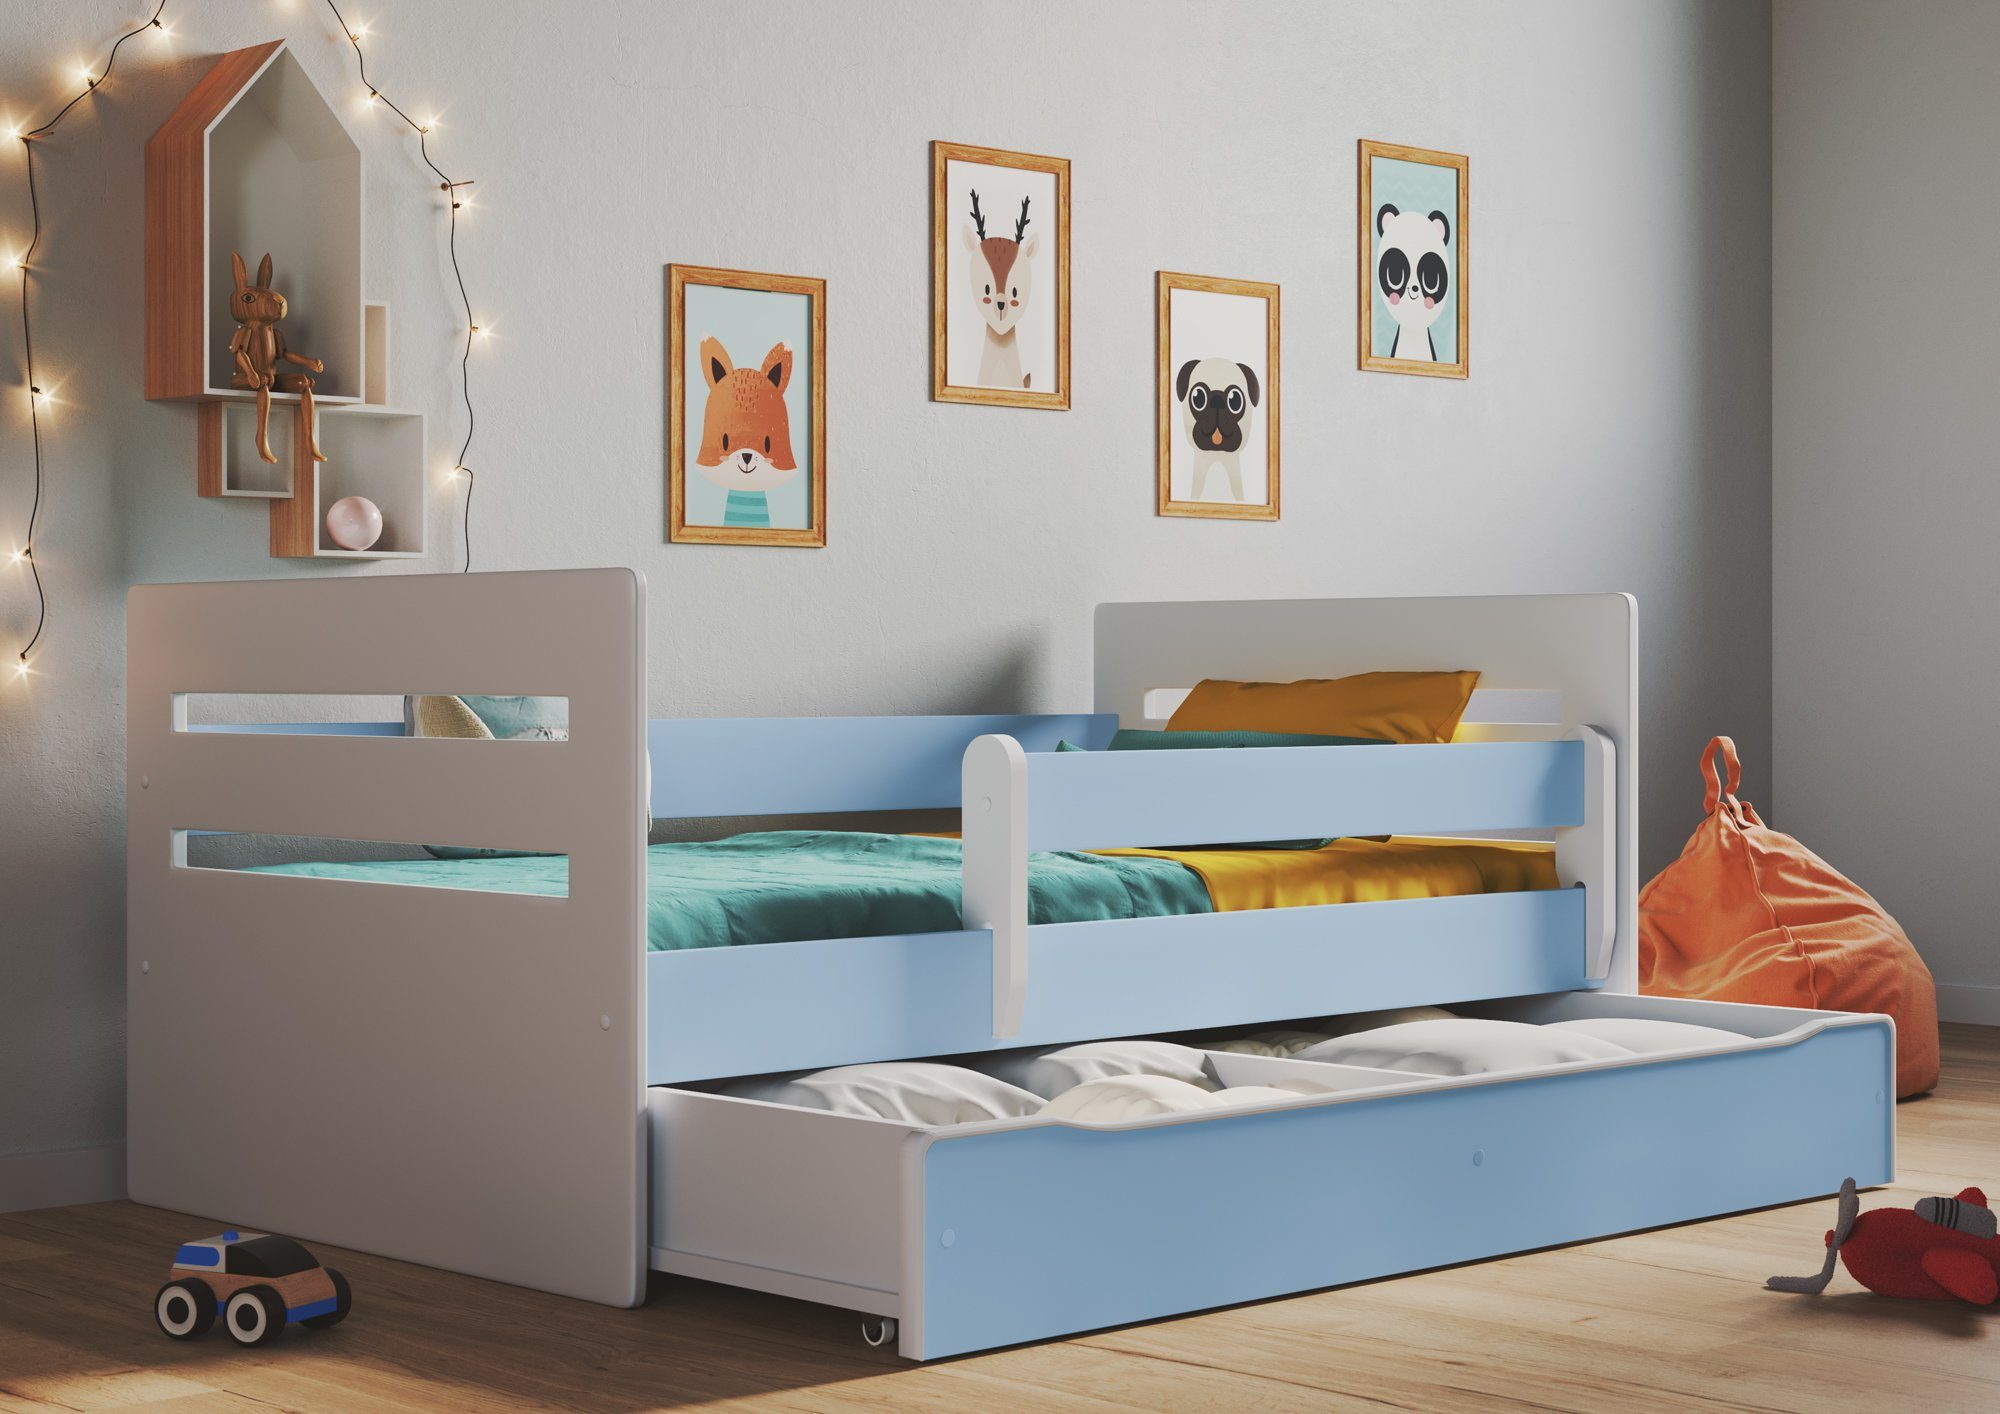 Kinderbett Jugendbett mit Matratze Lattenrost Bettkasten 180 x 80 